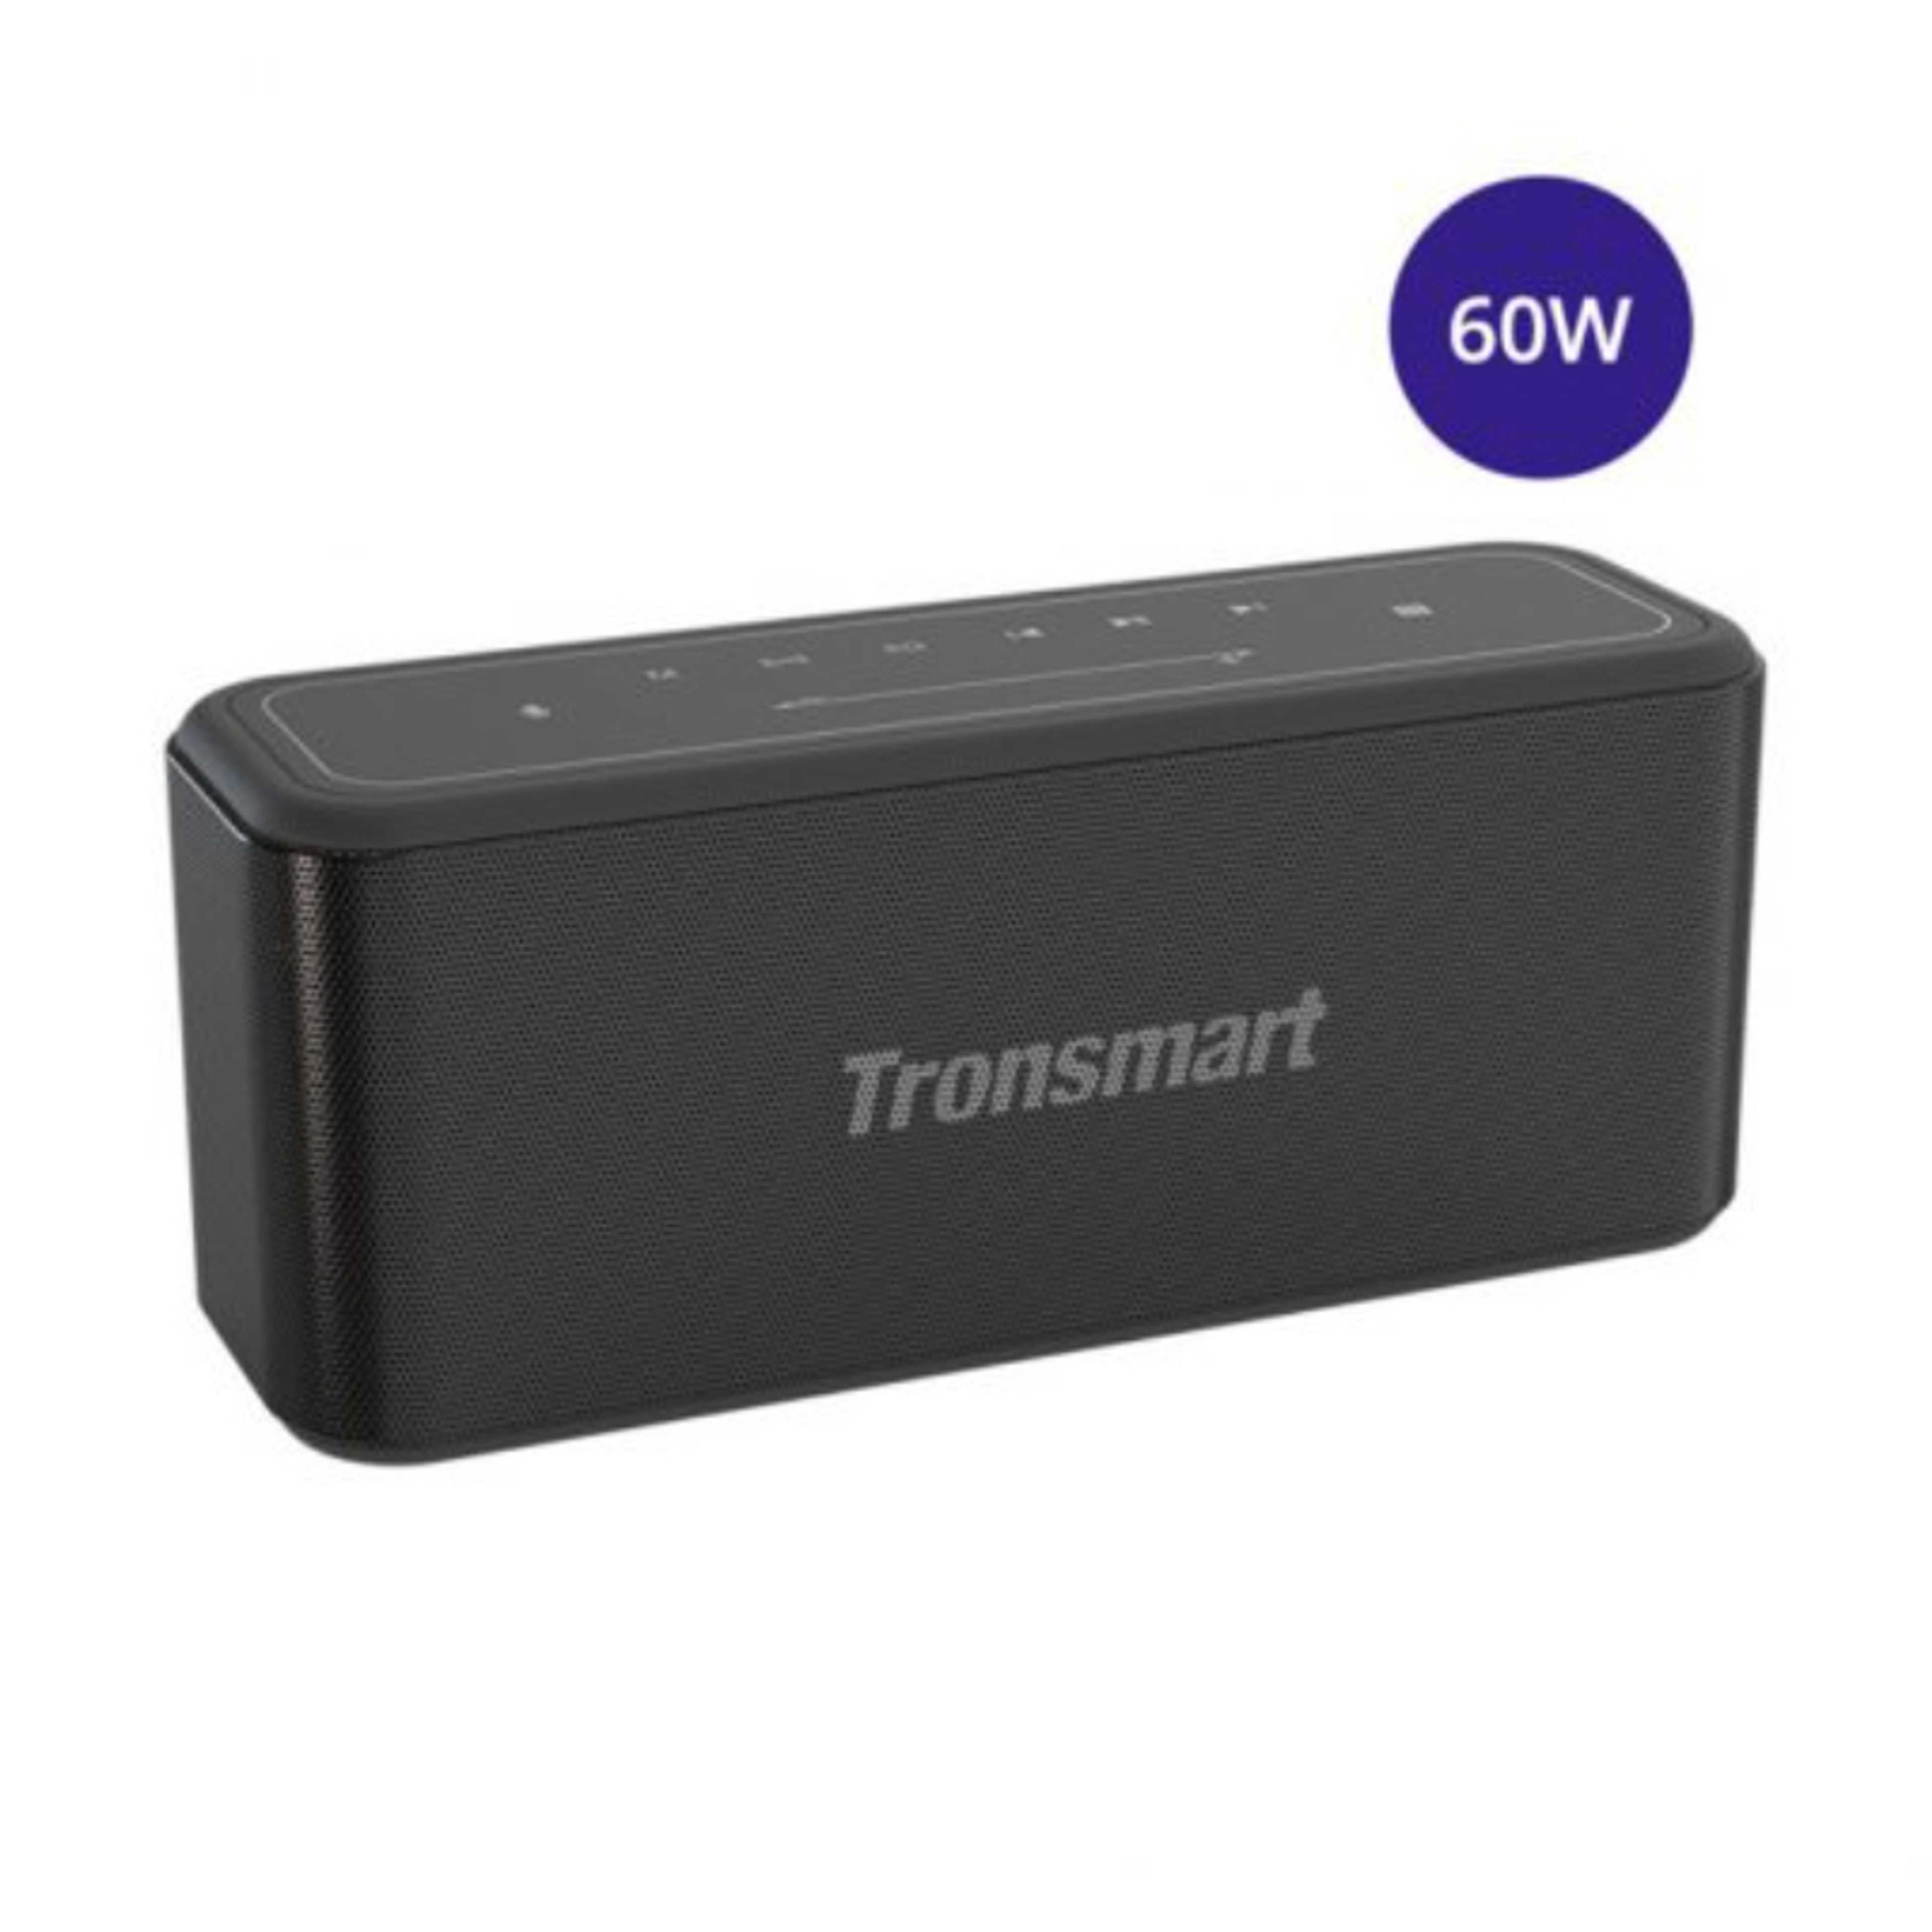 Tronsmart Mega Pro Portable Wireless Speake with 60W Stereo Sound, Waterproof Speaker, 10400mAh Battery Power Bank, NFC, Touch Panel – Black